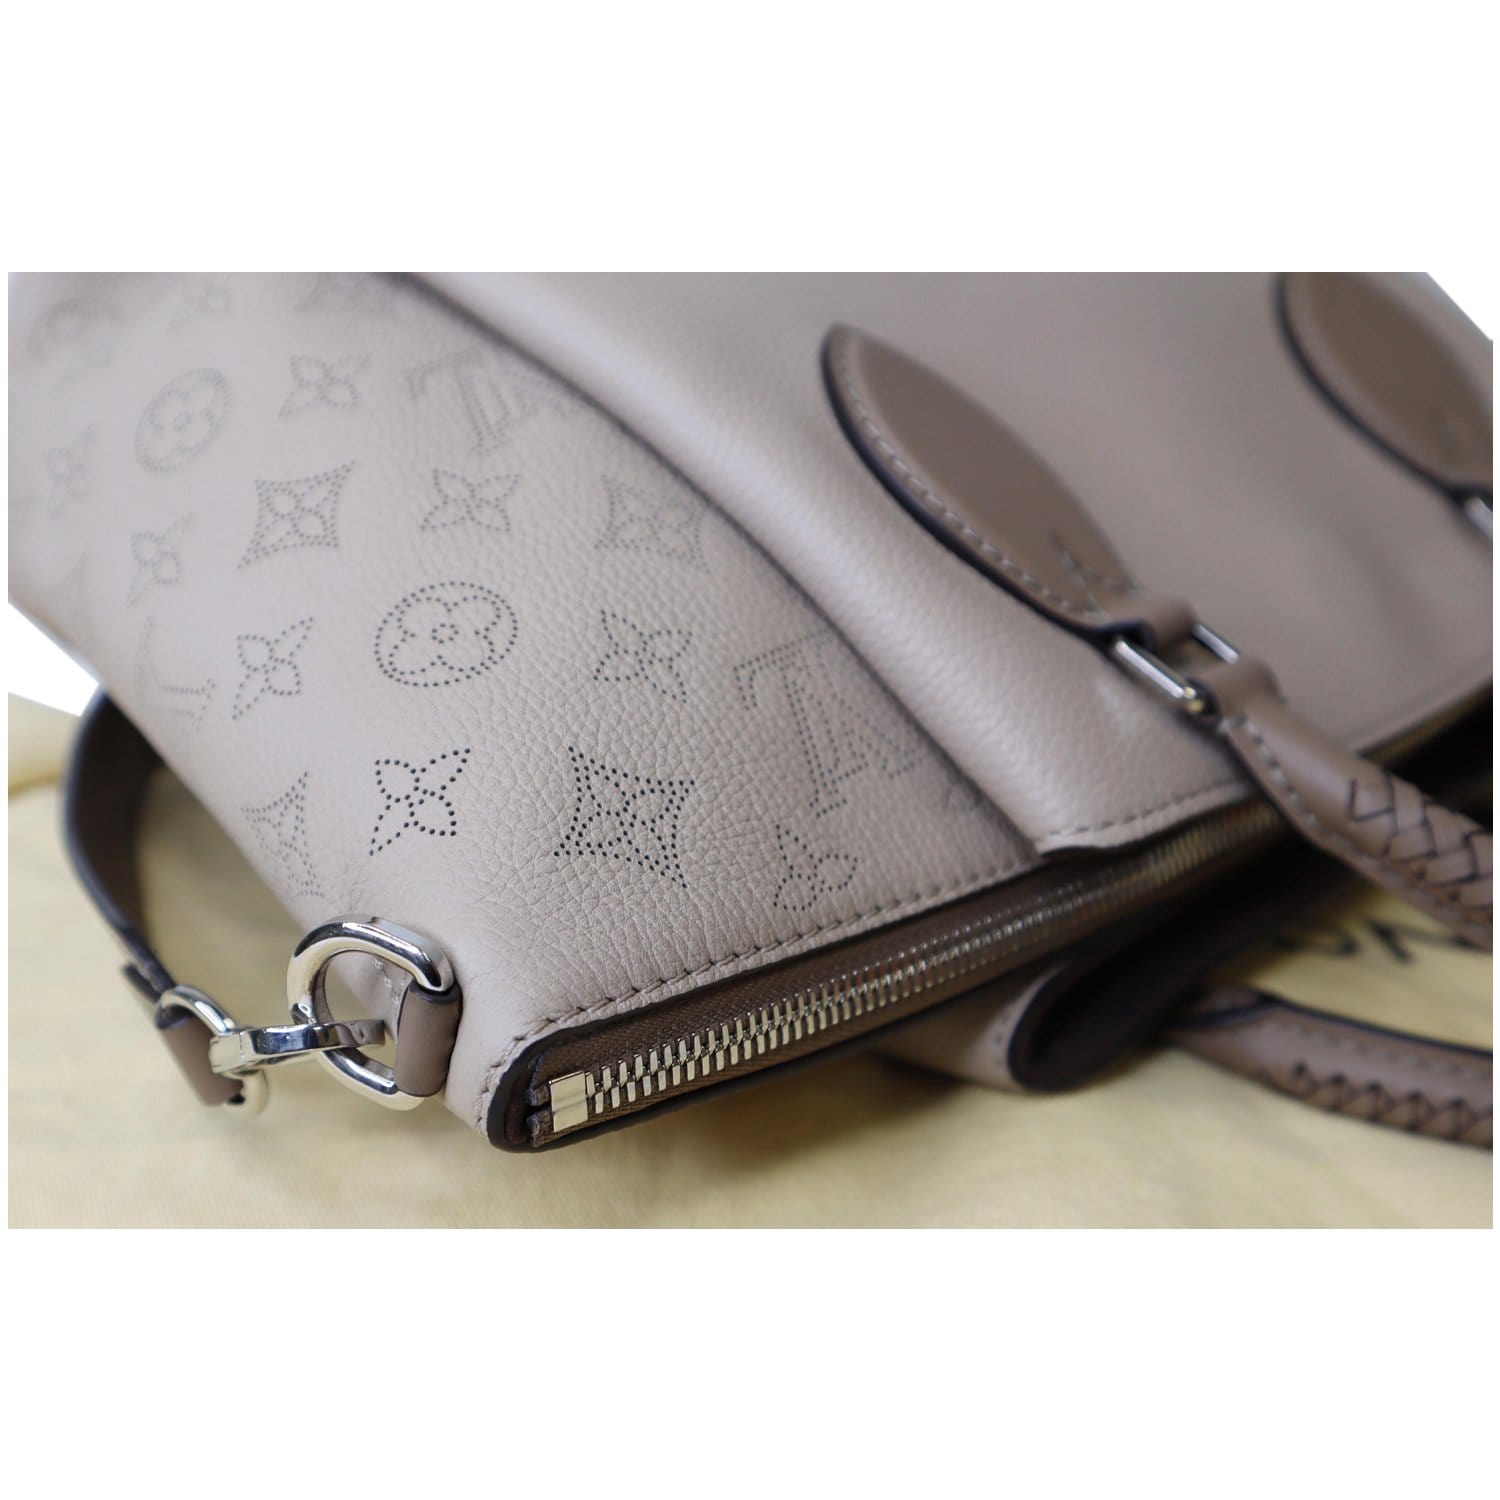 Mahina Leather Haumea Bag Magnolia M55030  Bags, Louis vuitton bag, Purses  and handbags